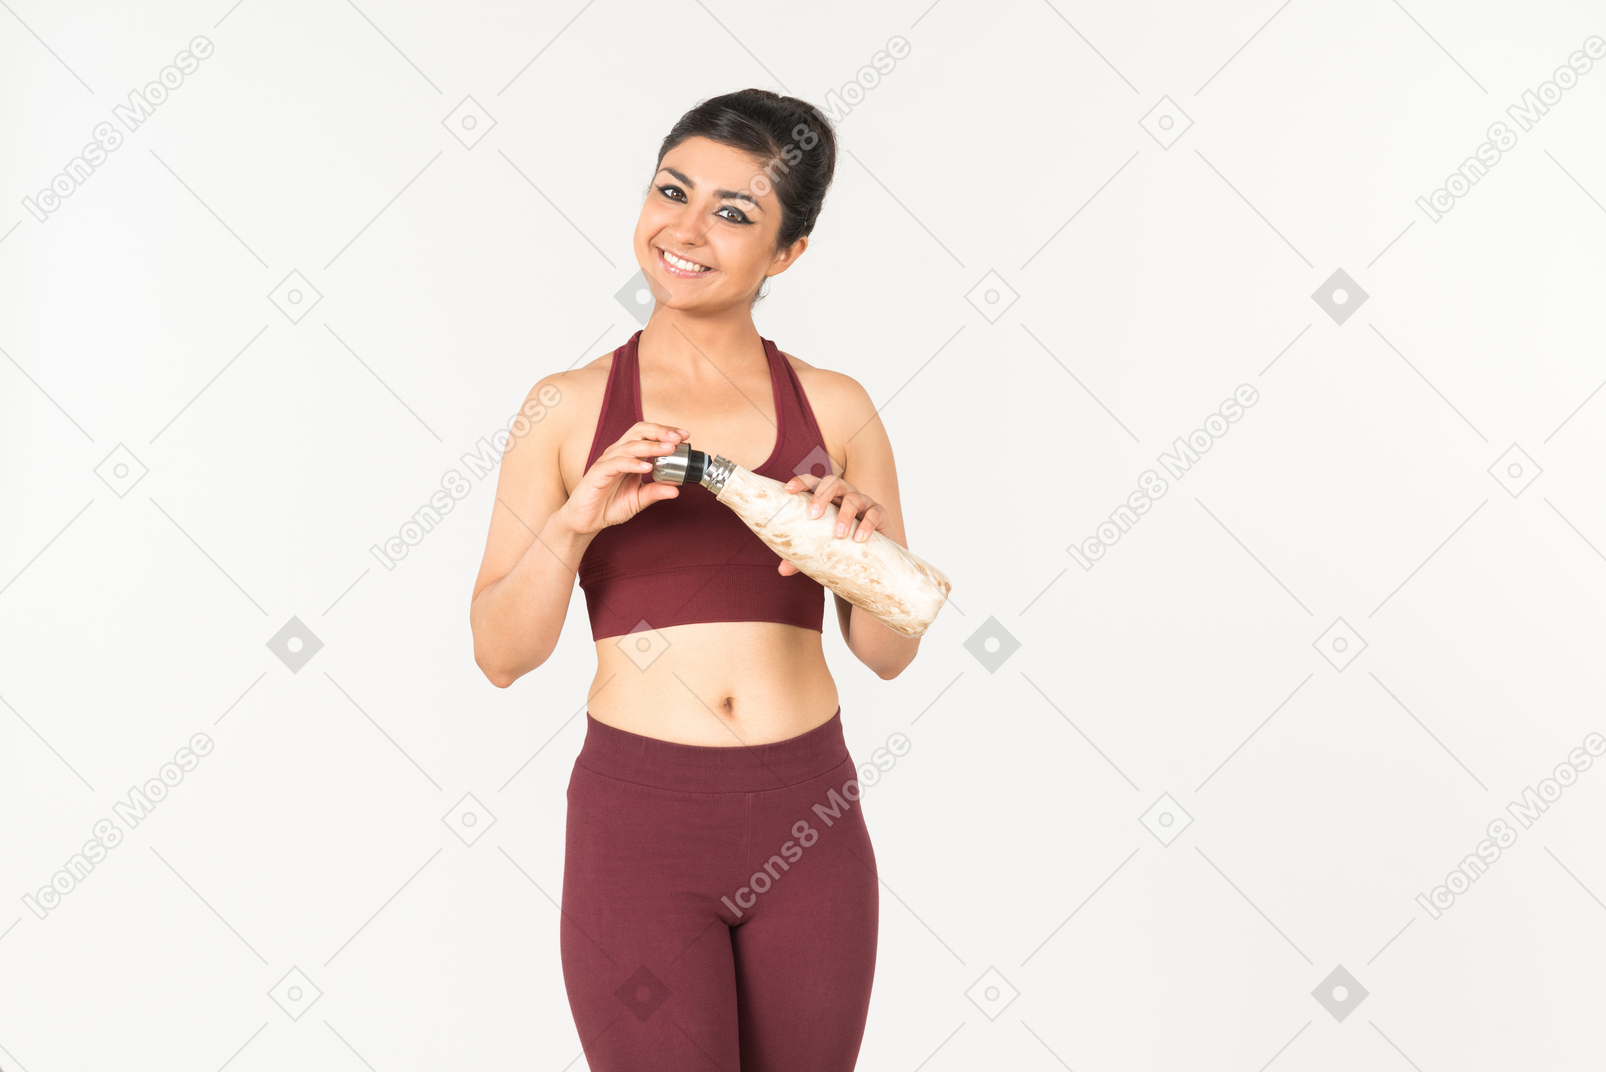 Young indian woman in sportswear holding sport bottle